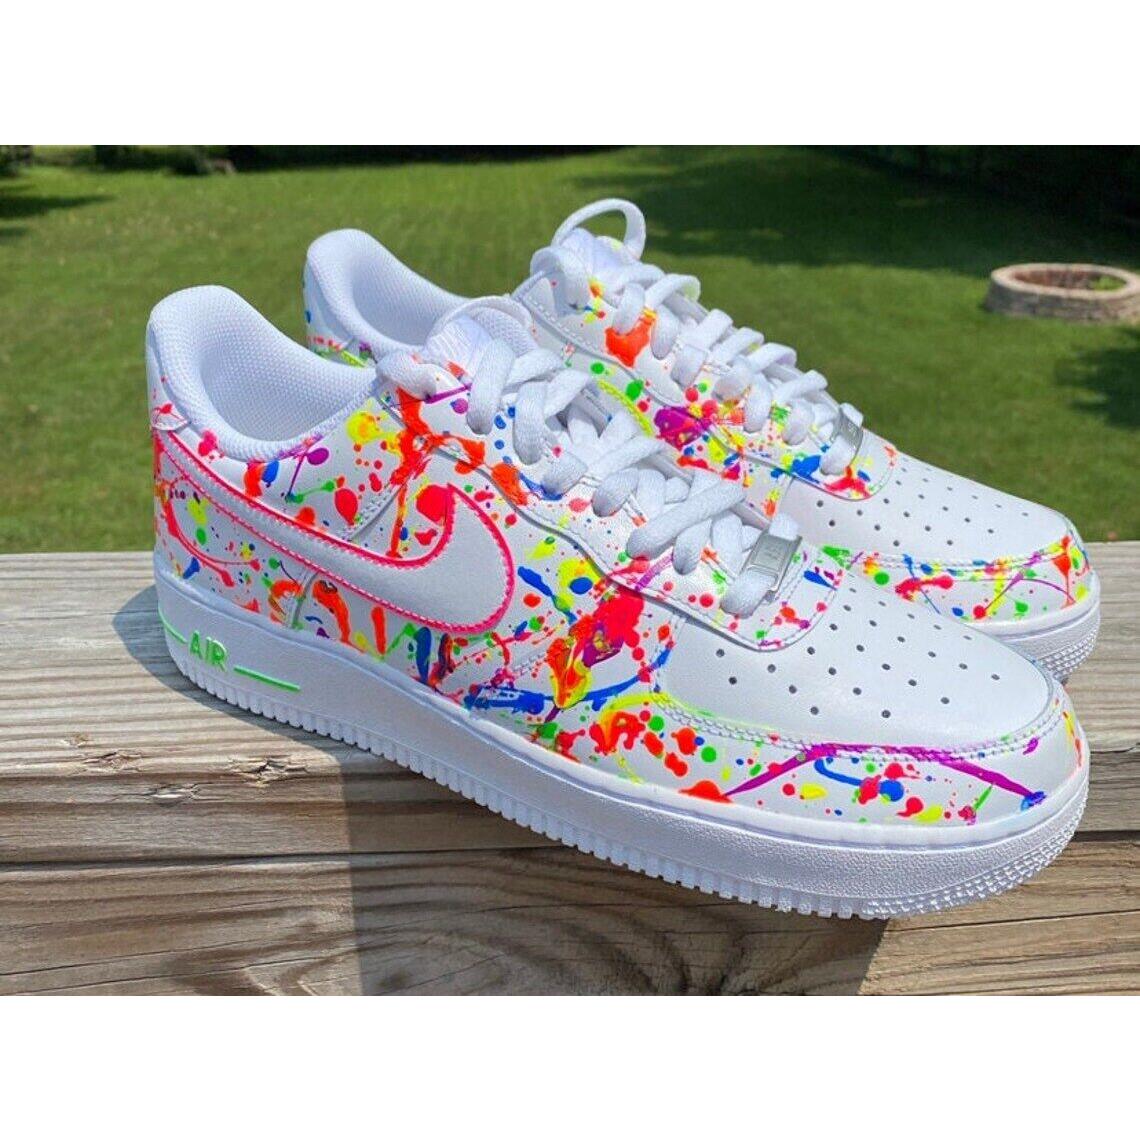 Nike Air Force 1 Custom Fiery Neon Splatter Graffiti White Shoes Men  Women Kid